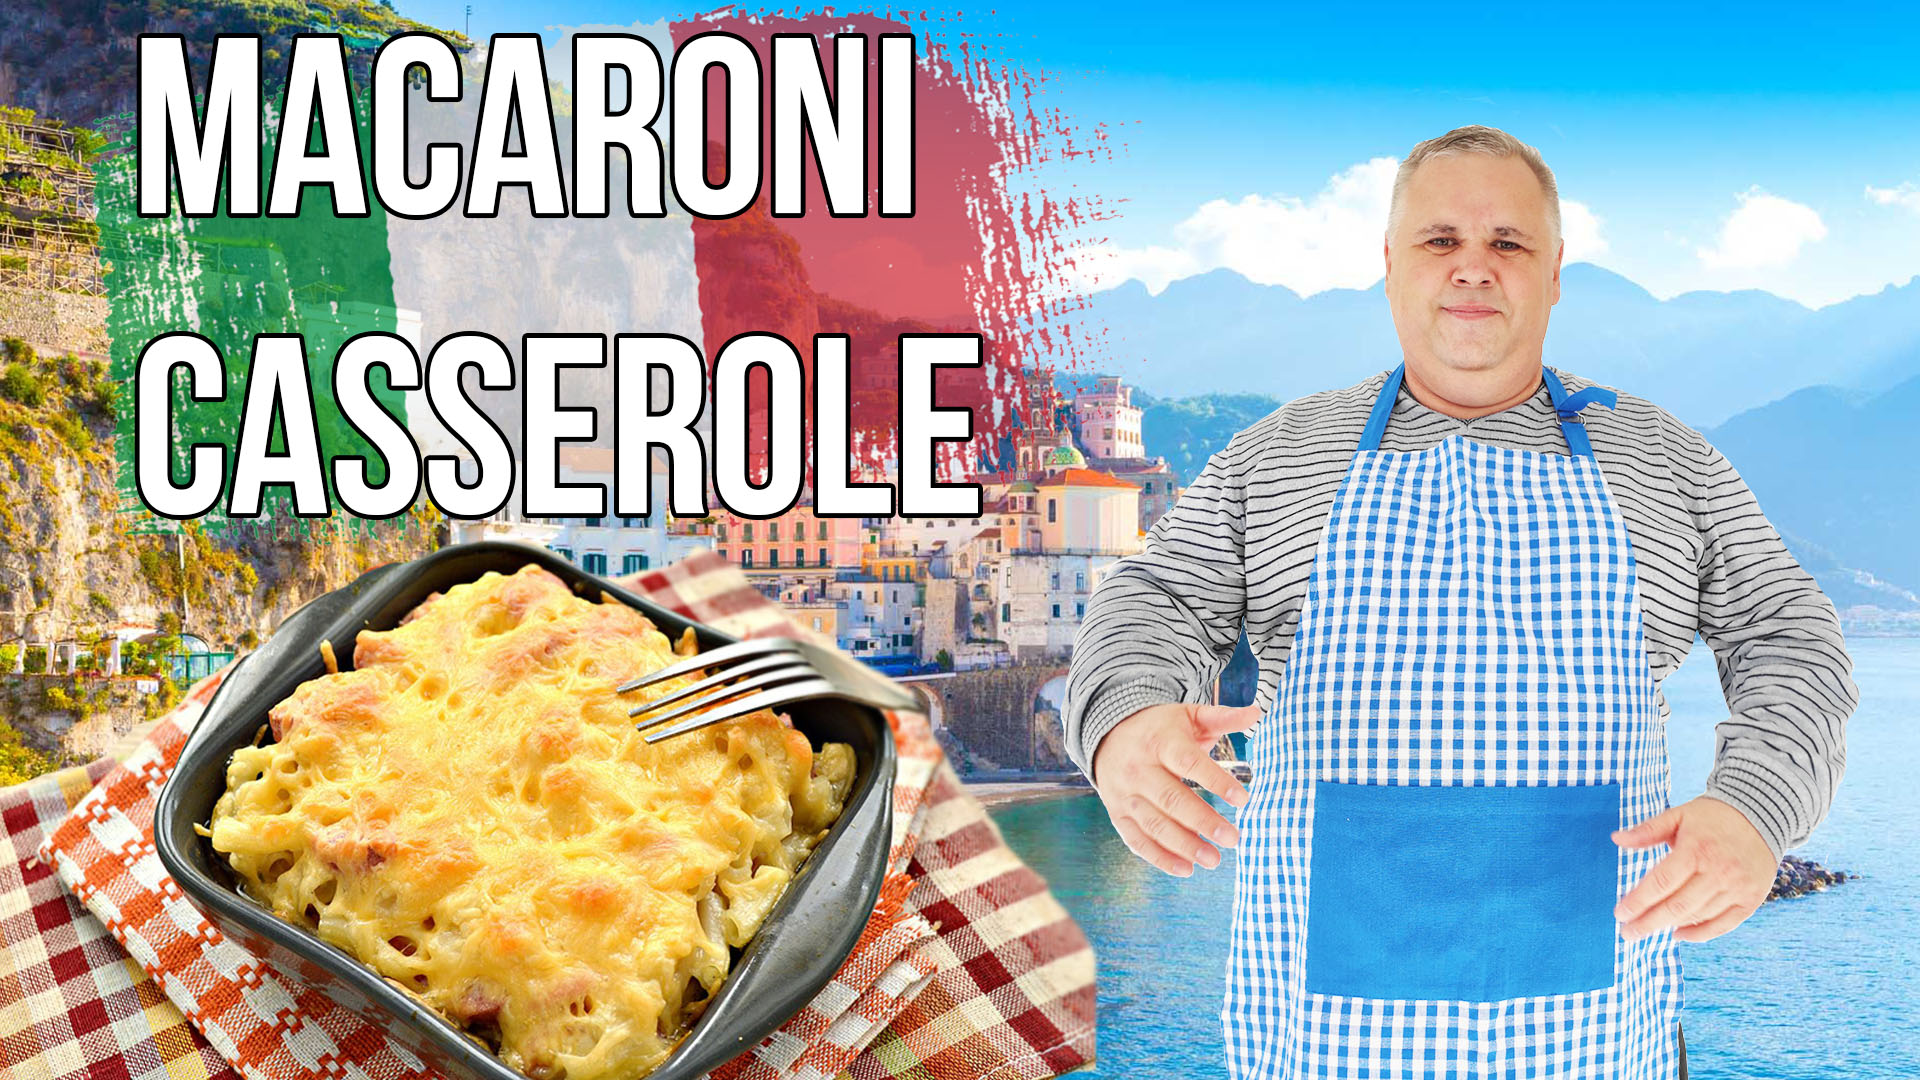 Macaroni and Cheese Recipe, meat, mushrooms. Macaroni casserole.